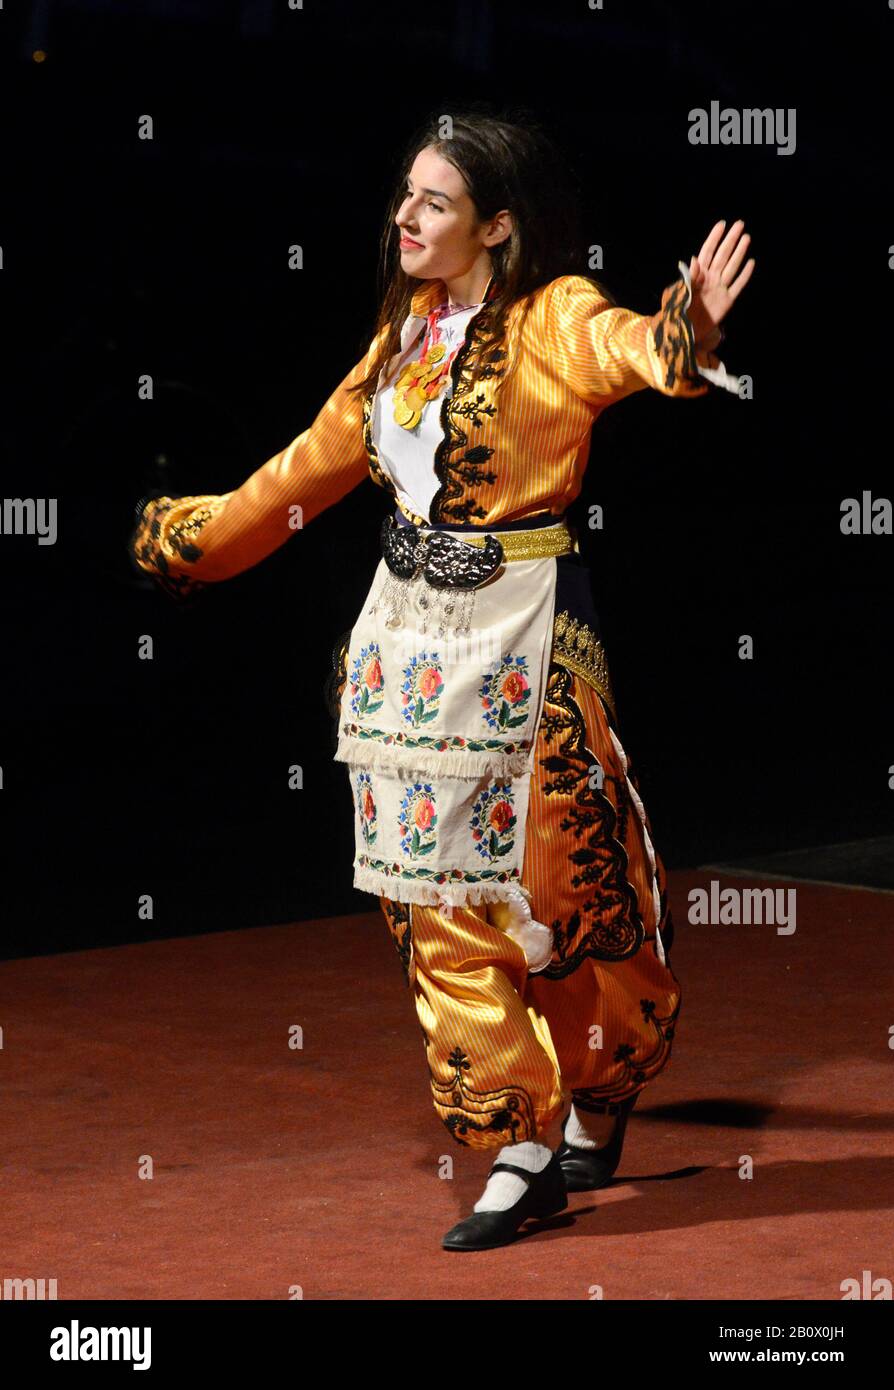 Albanian folk dancer with traditional costume, celebrating Ramadan in Skopje, Macedonia Stock Photo